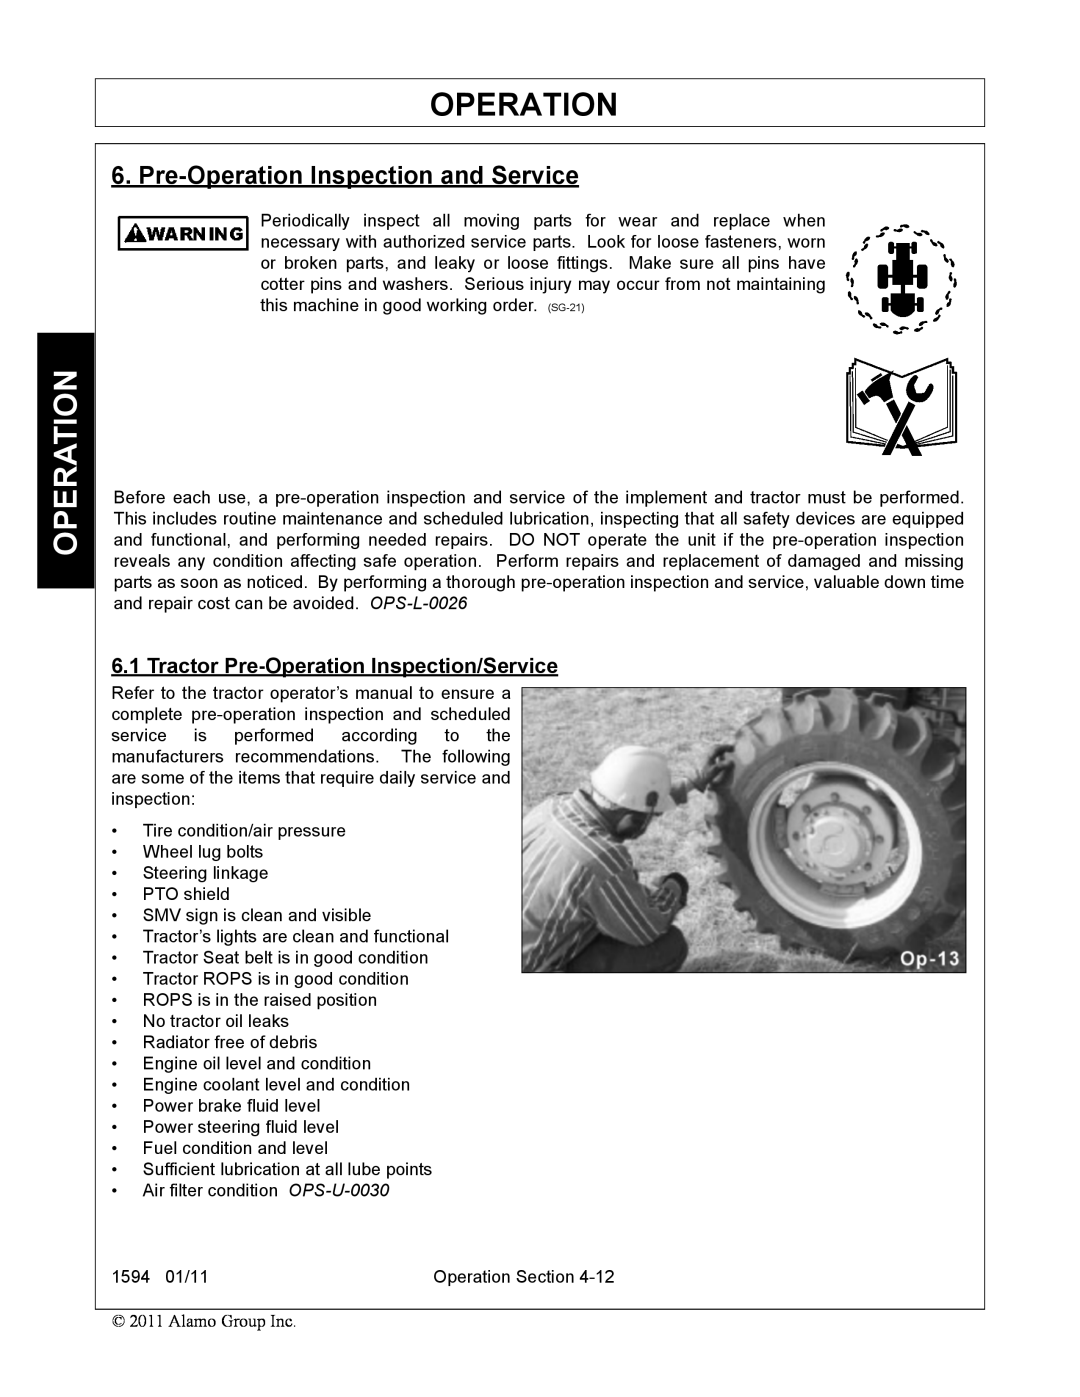 Rhino Mounts 1594 manual Pre-Operation Inspection and Service, Tractor Pre-Operation Inspection/Service 